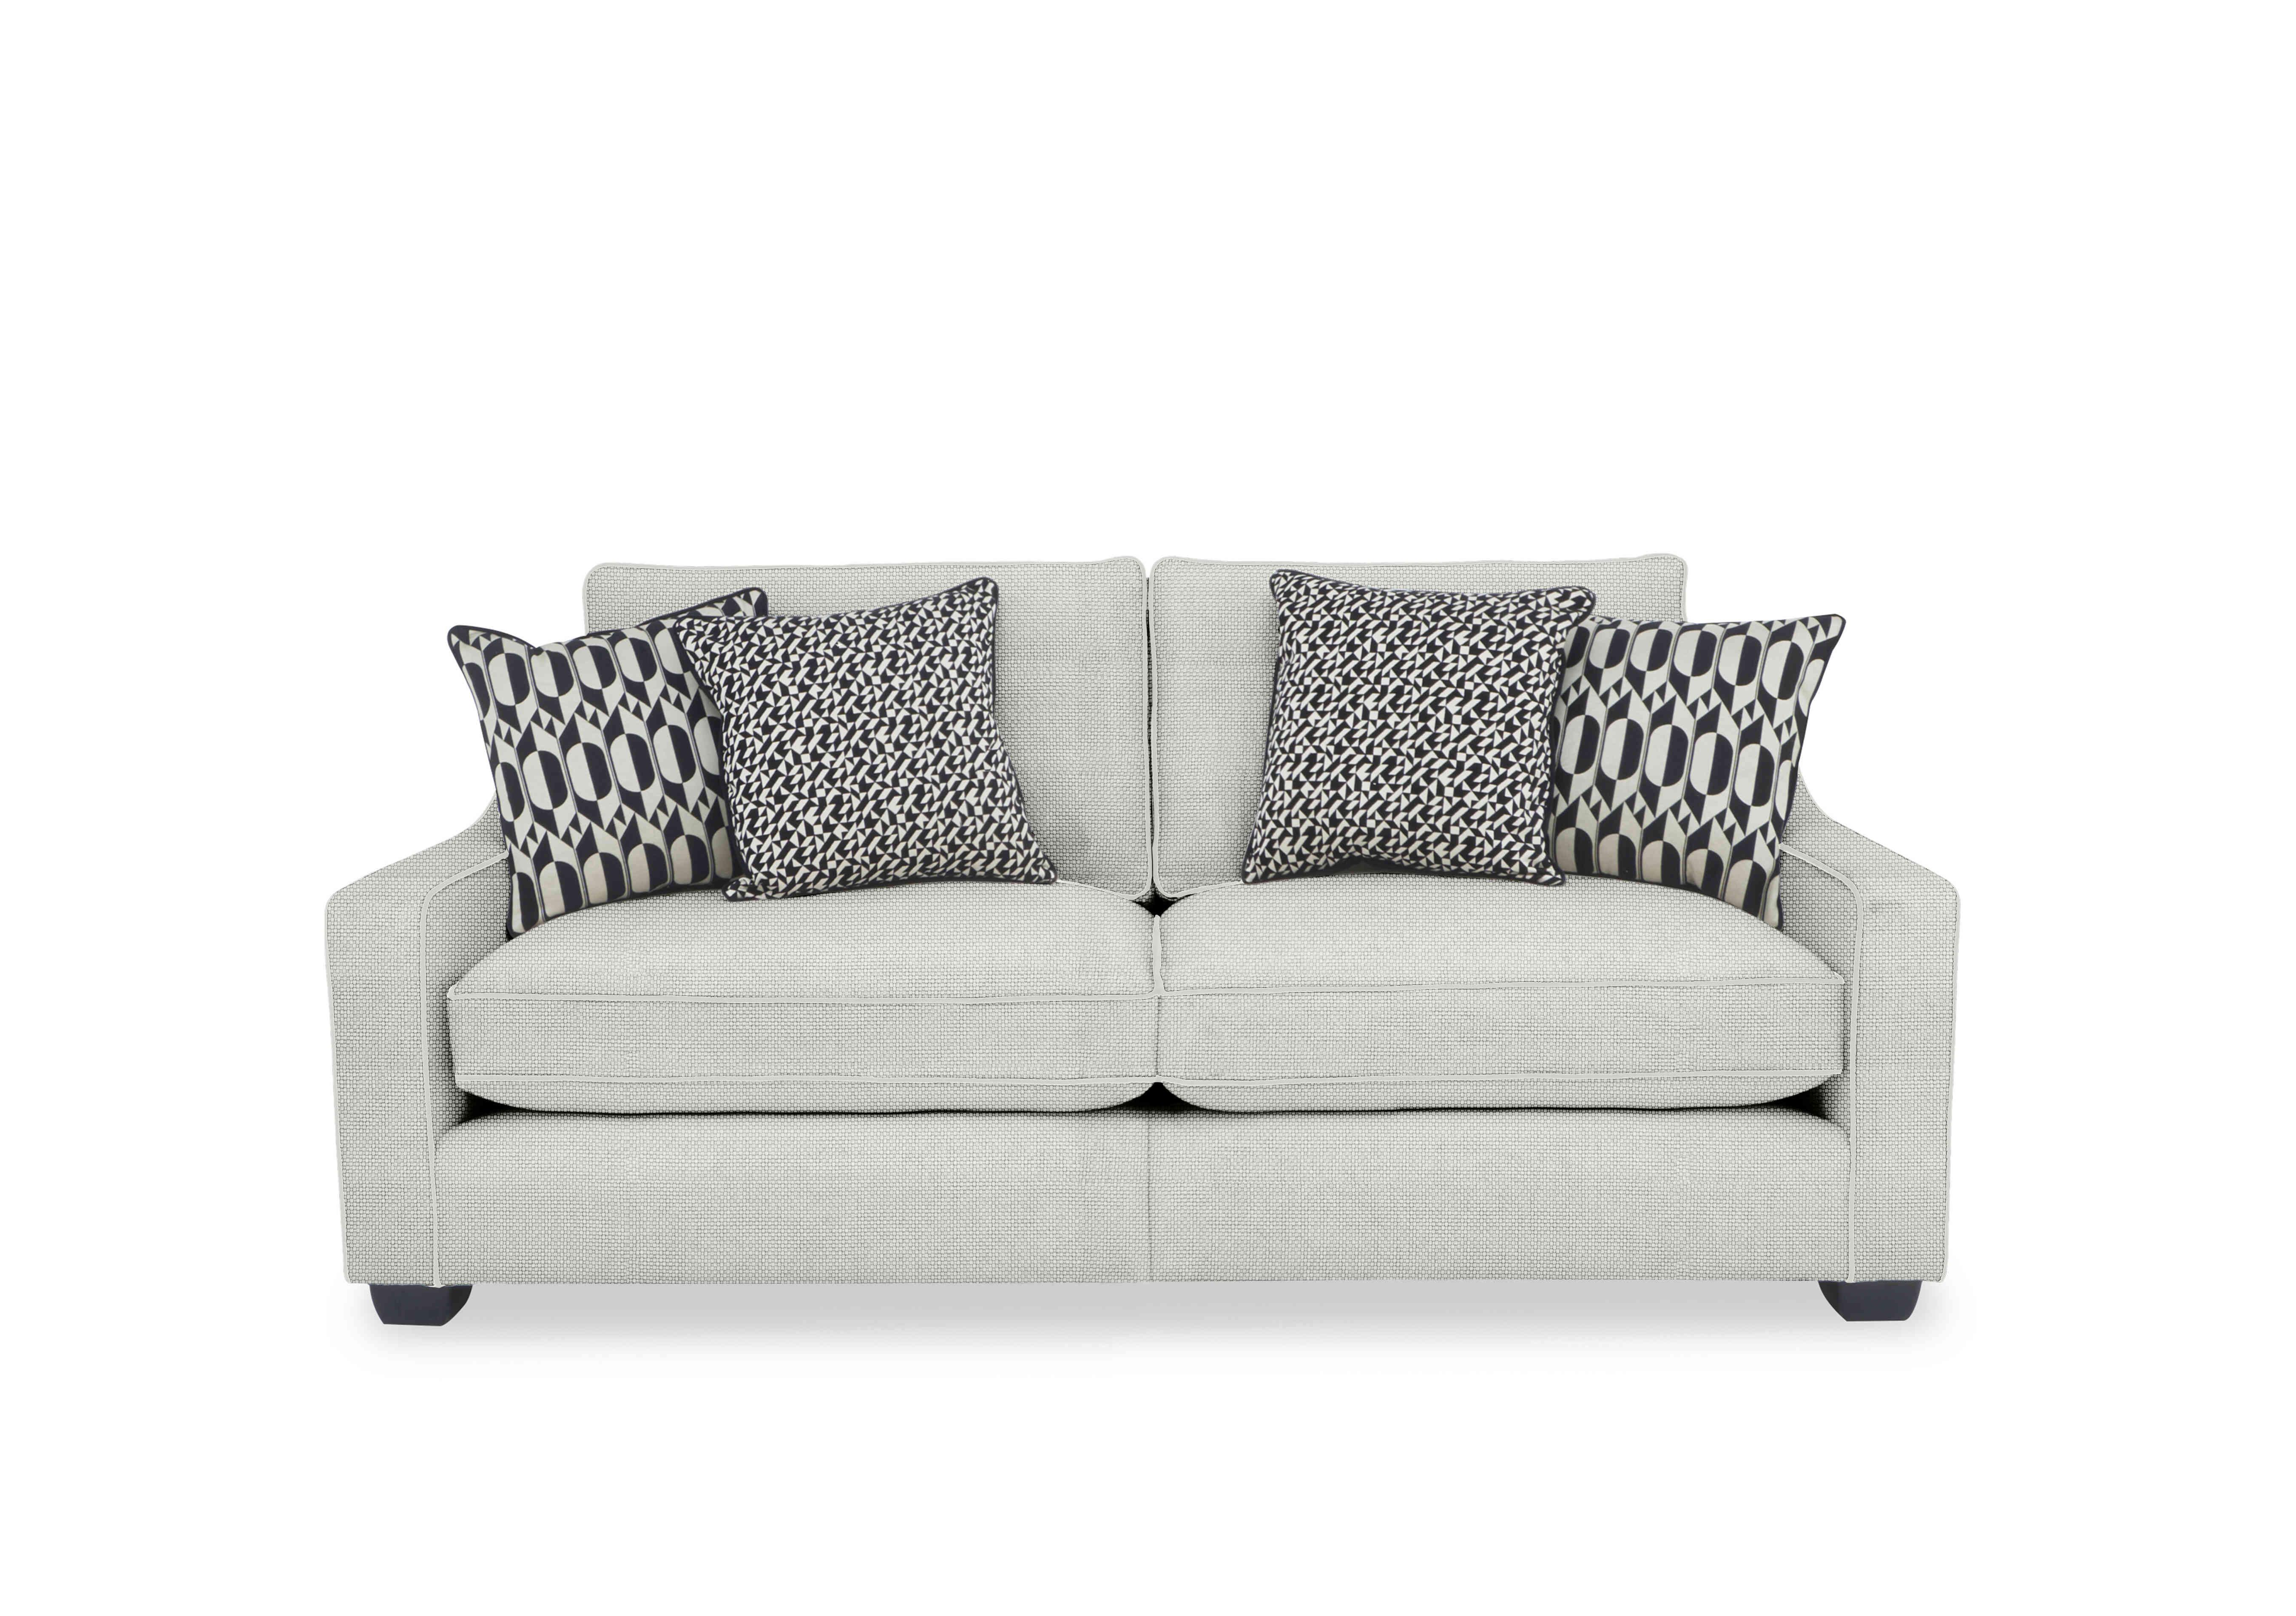 Celine 3 Seater Sofa in Dice Monochrome Eb Sp on Furniture Village